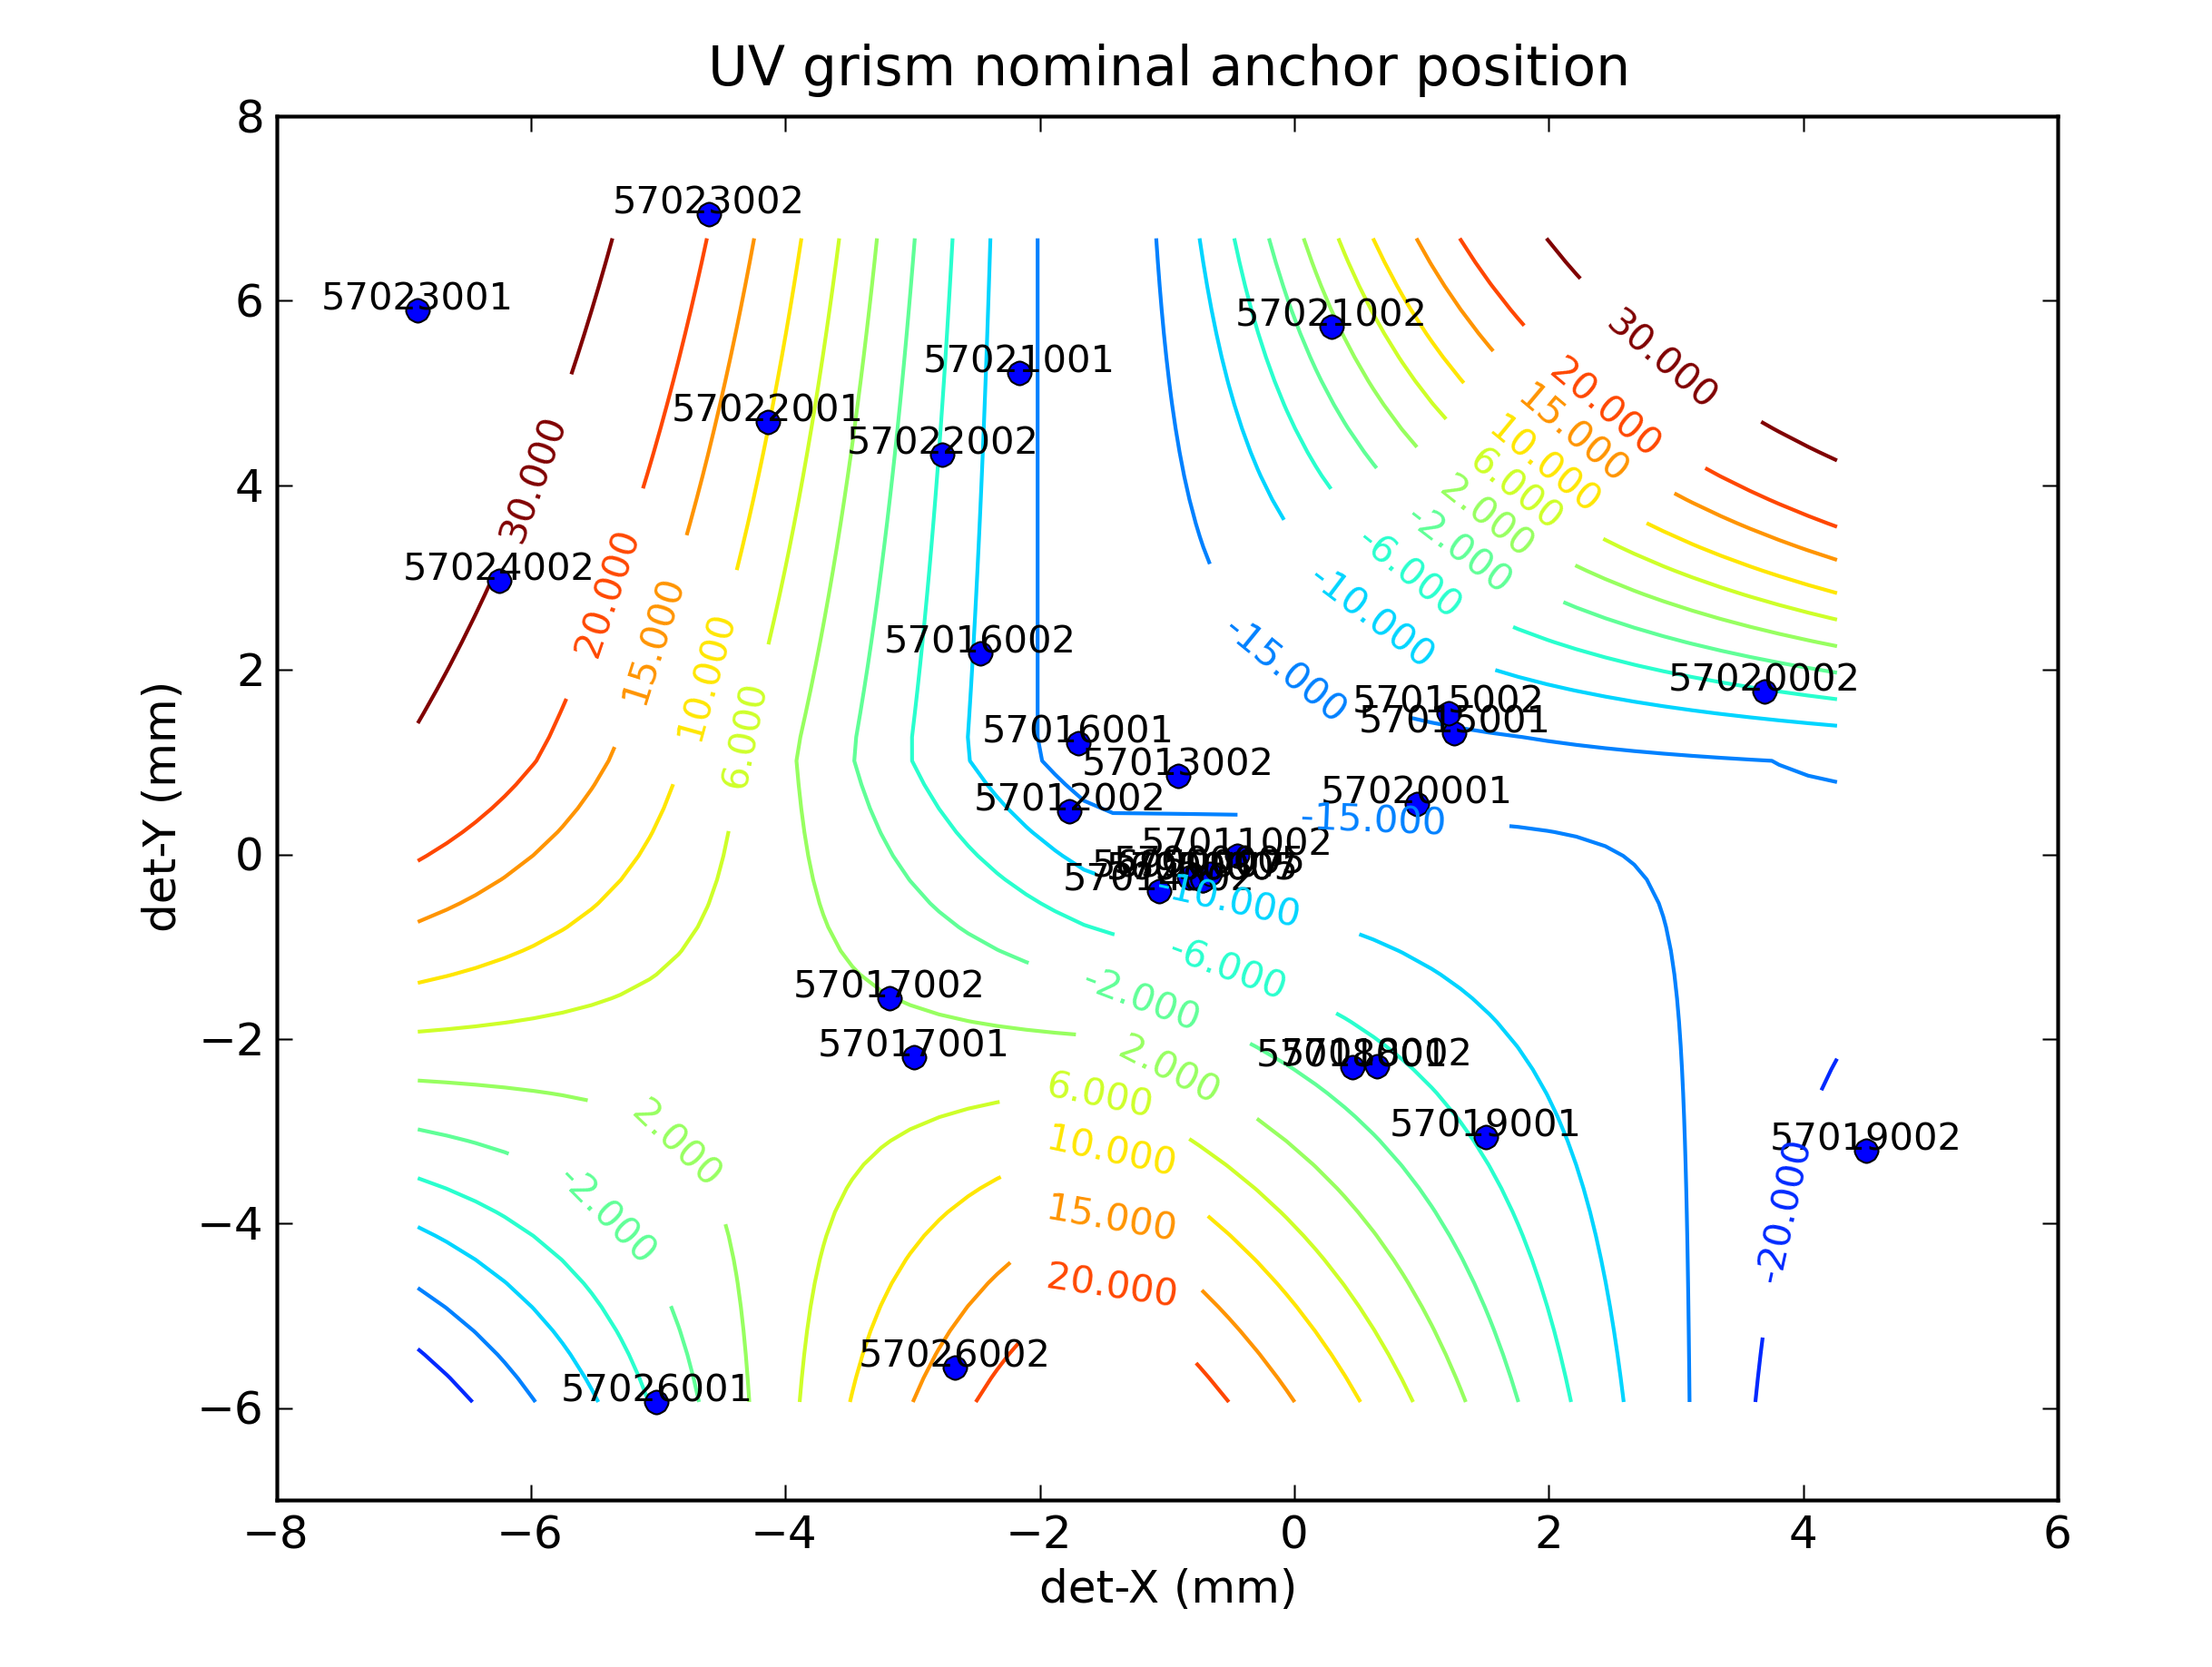 anchor position for nominal UV grism